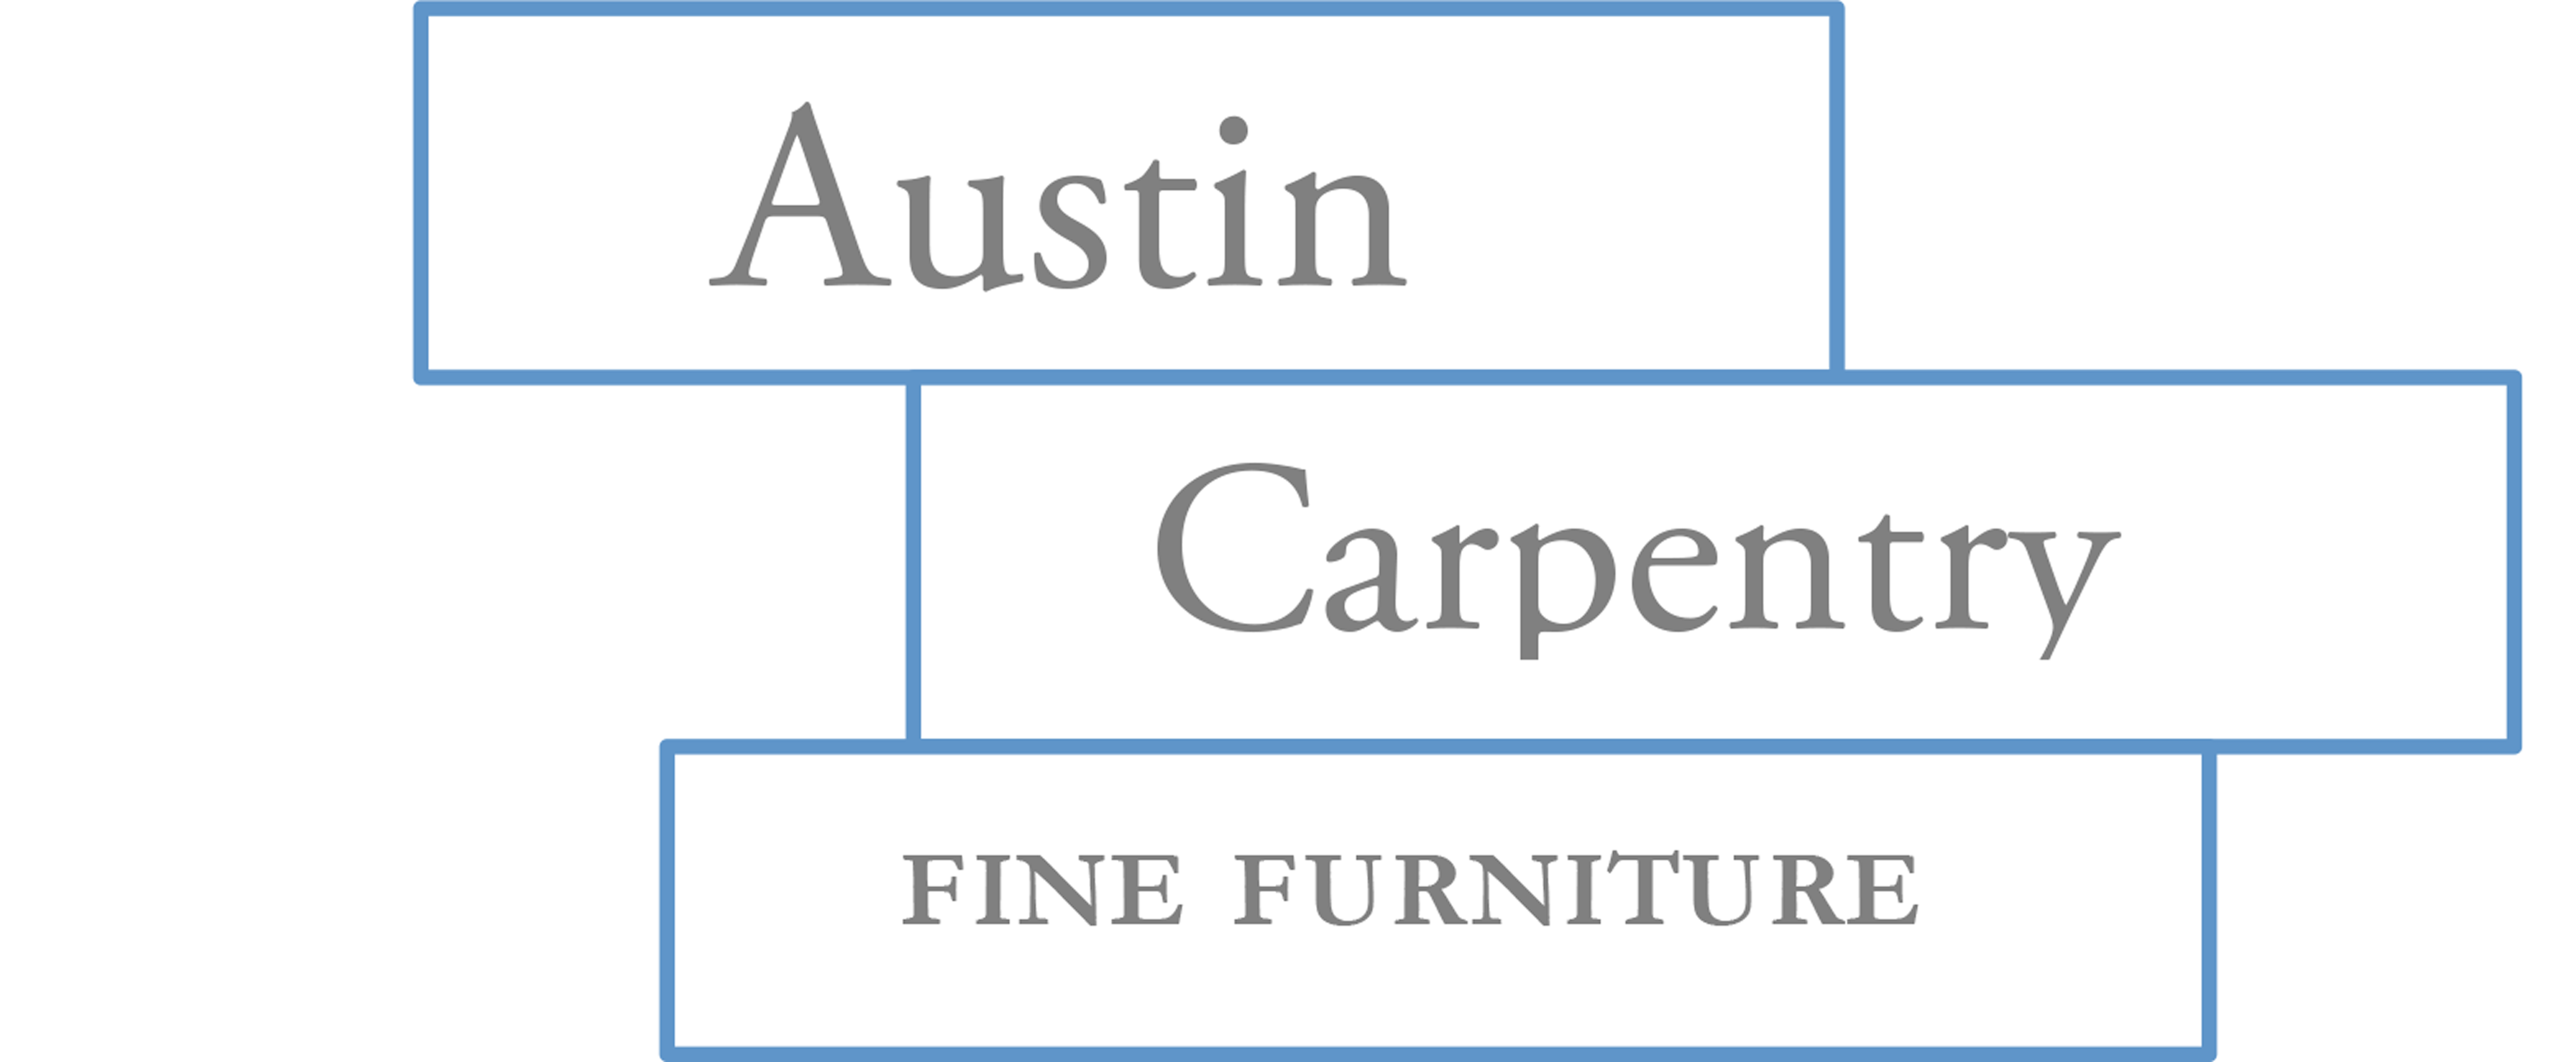 Austin Carpentry